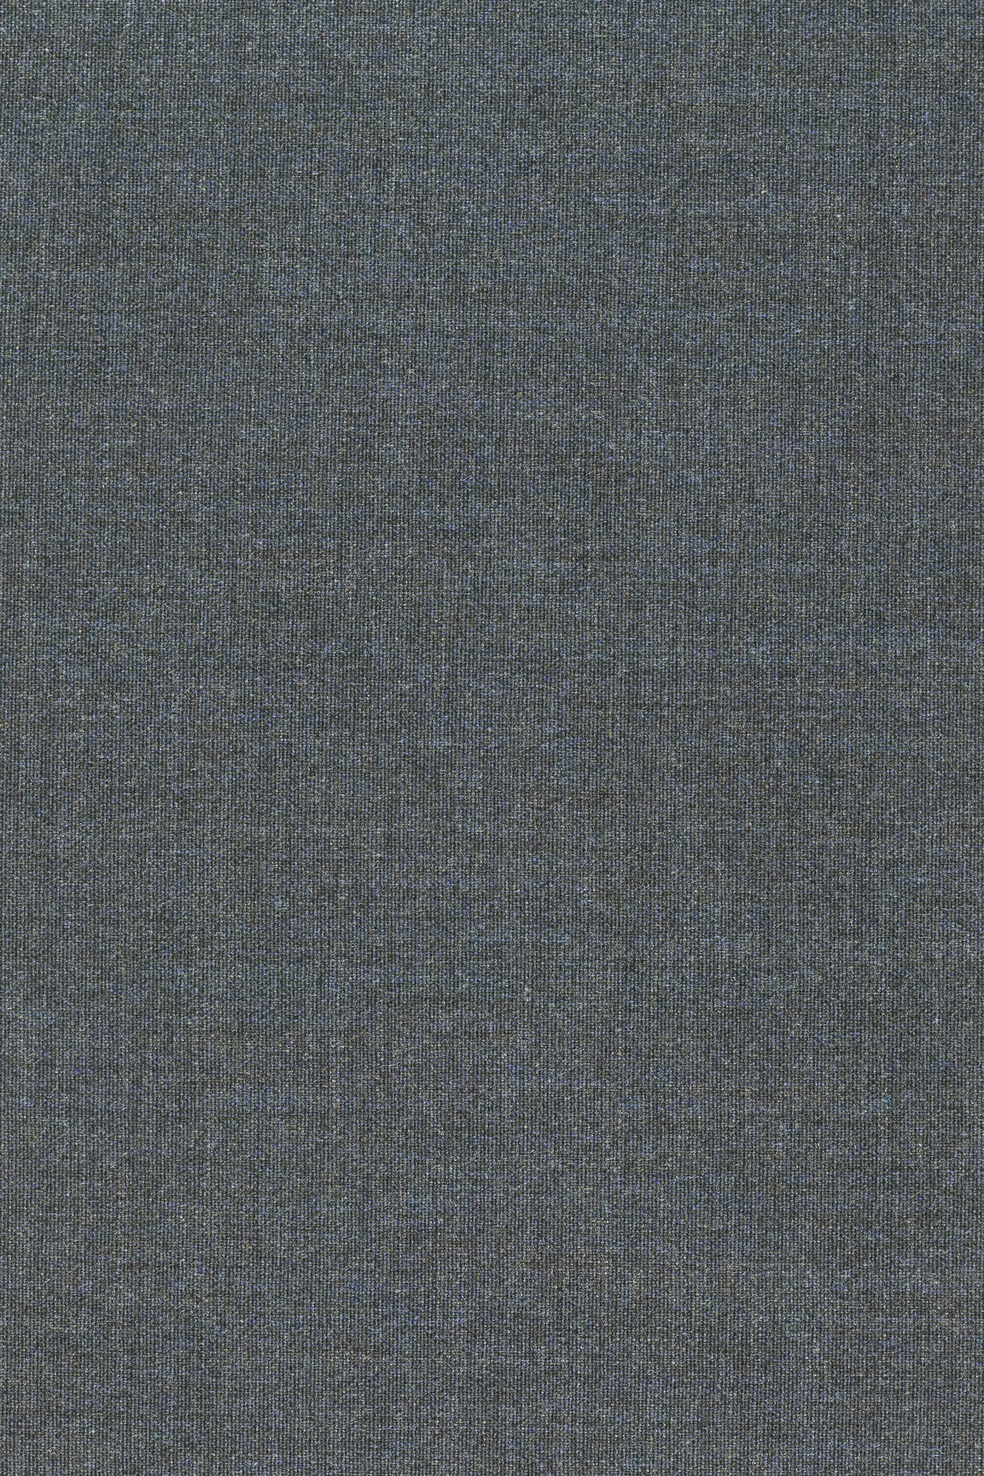 Fabric sample Remix 2 753 blue